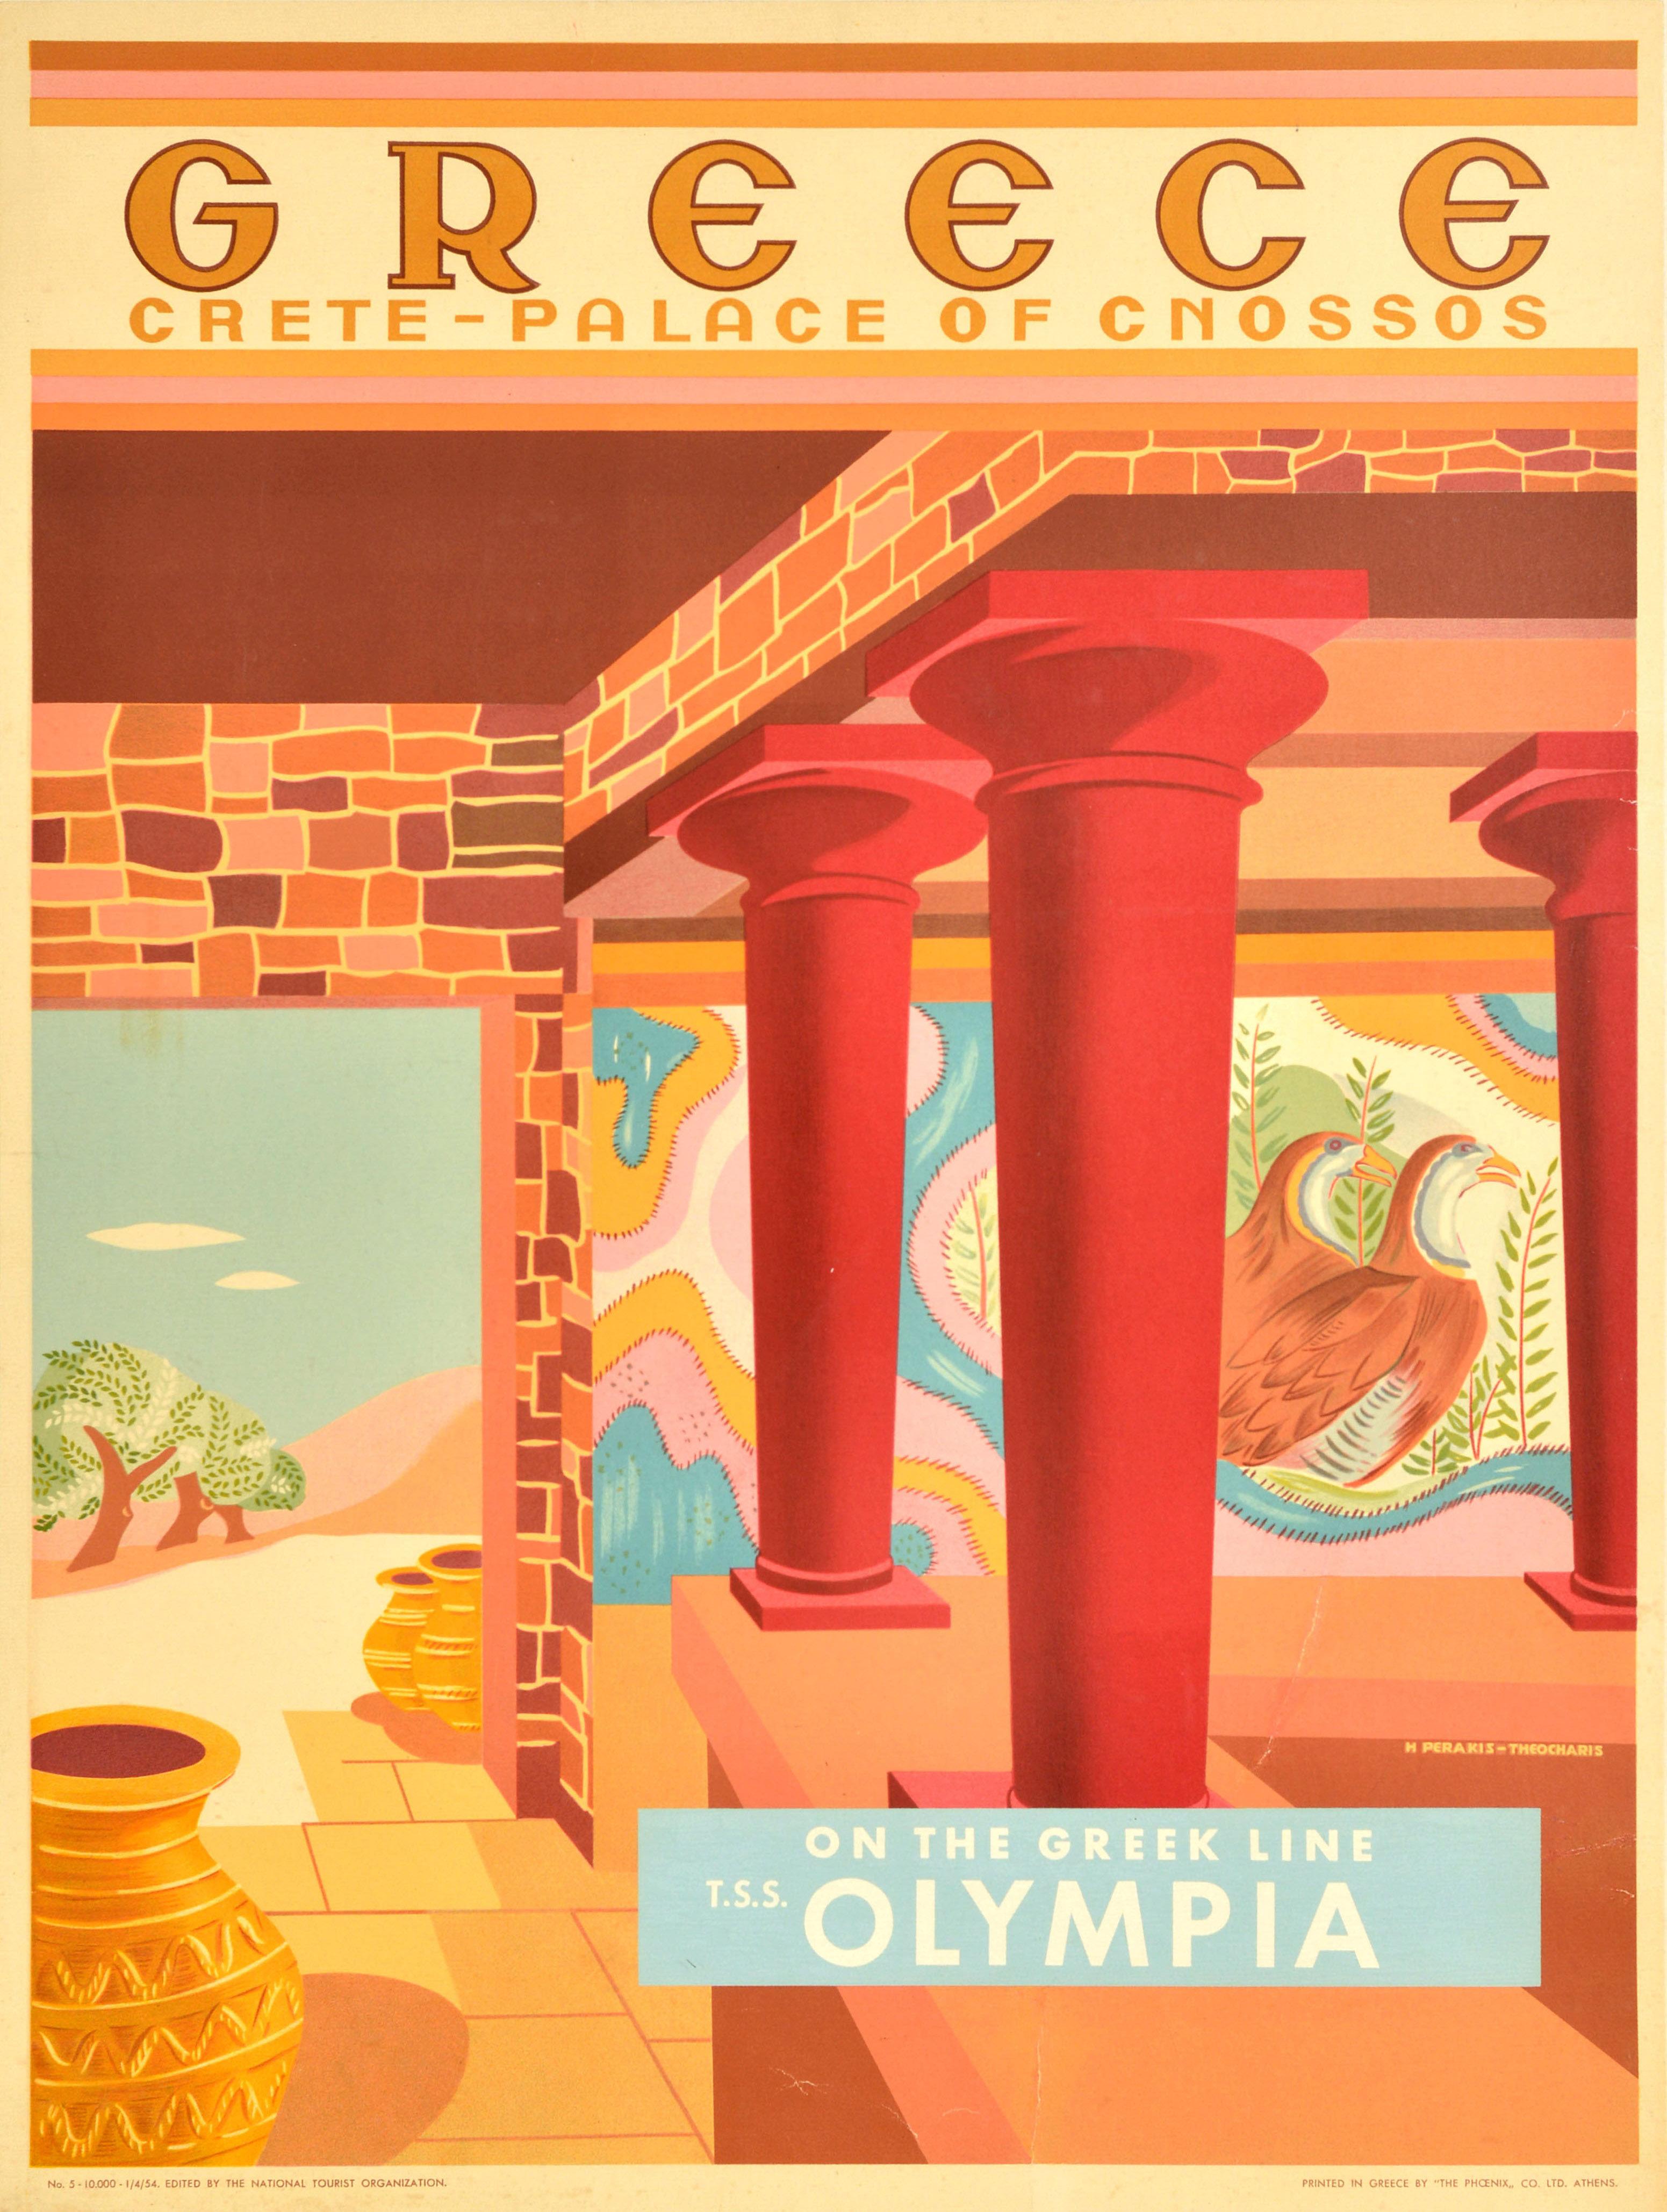 Unknown Print - Original Vintage Travel Poster Greece Crete Knossos Greek Line Olympia Cruise